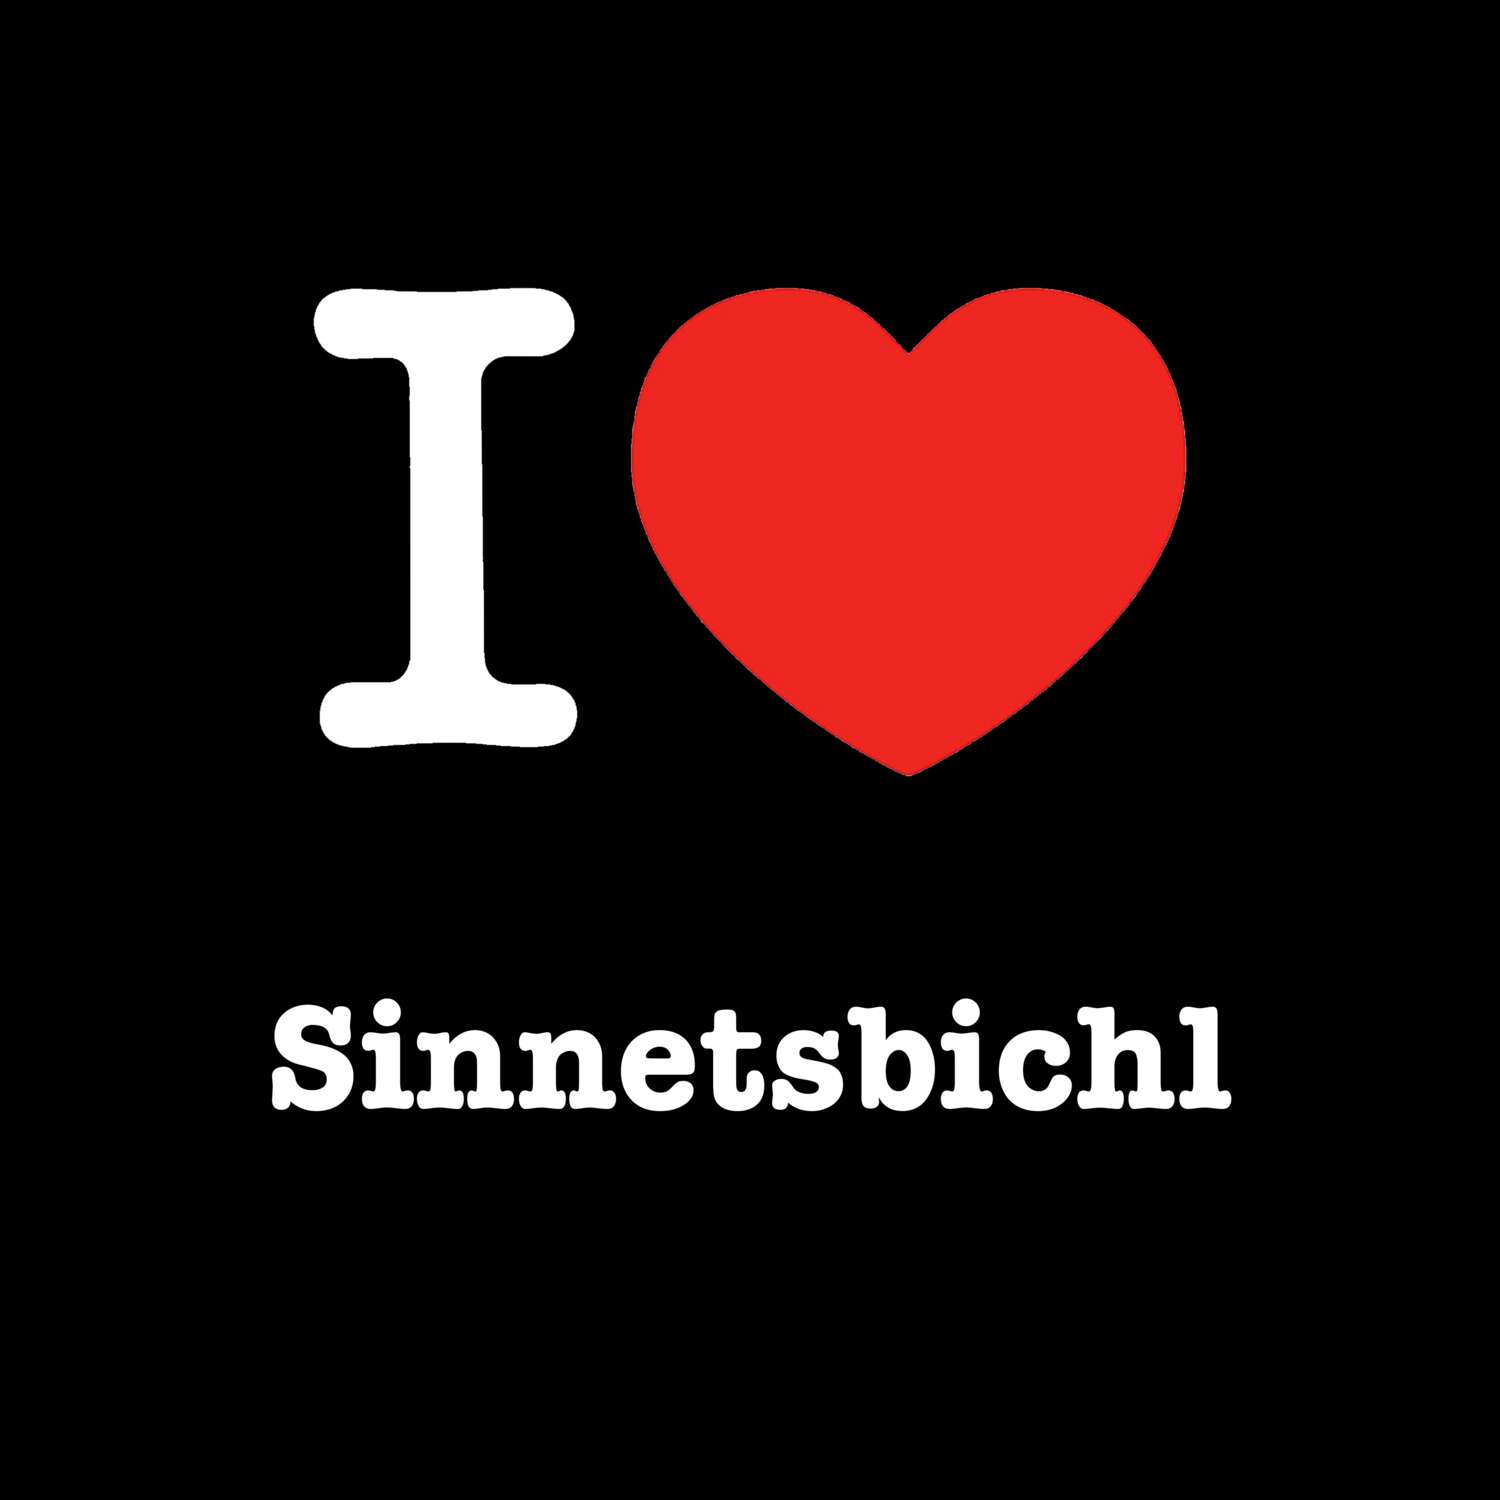 Sinnetsbichl T-Shirt »I love«